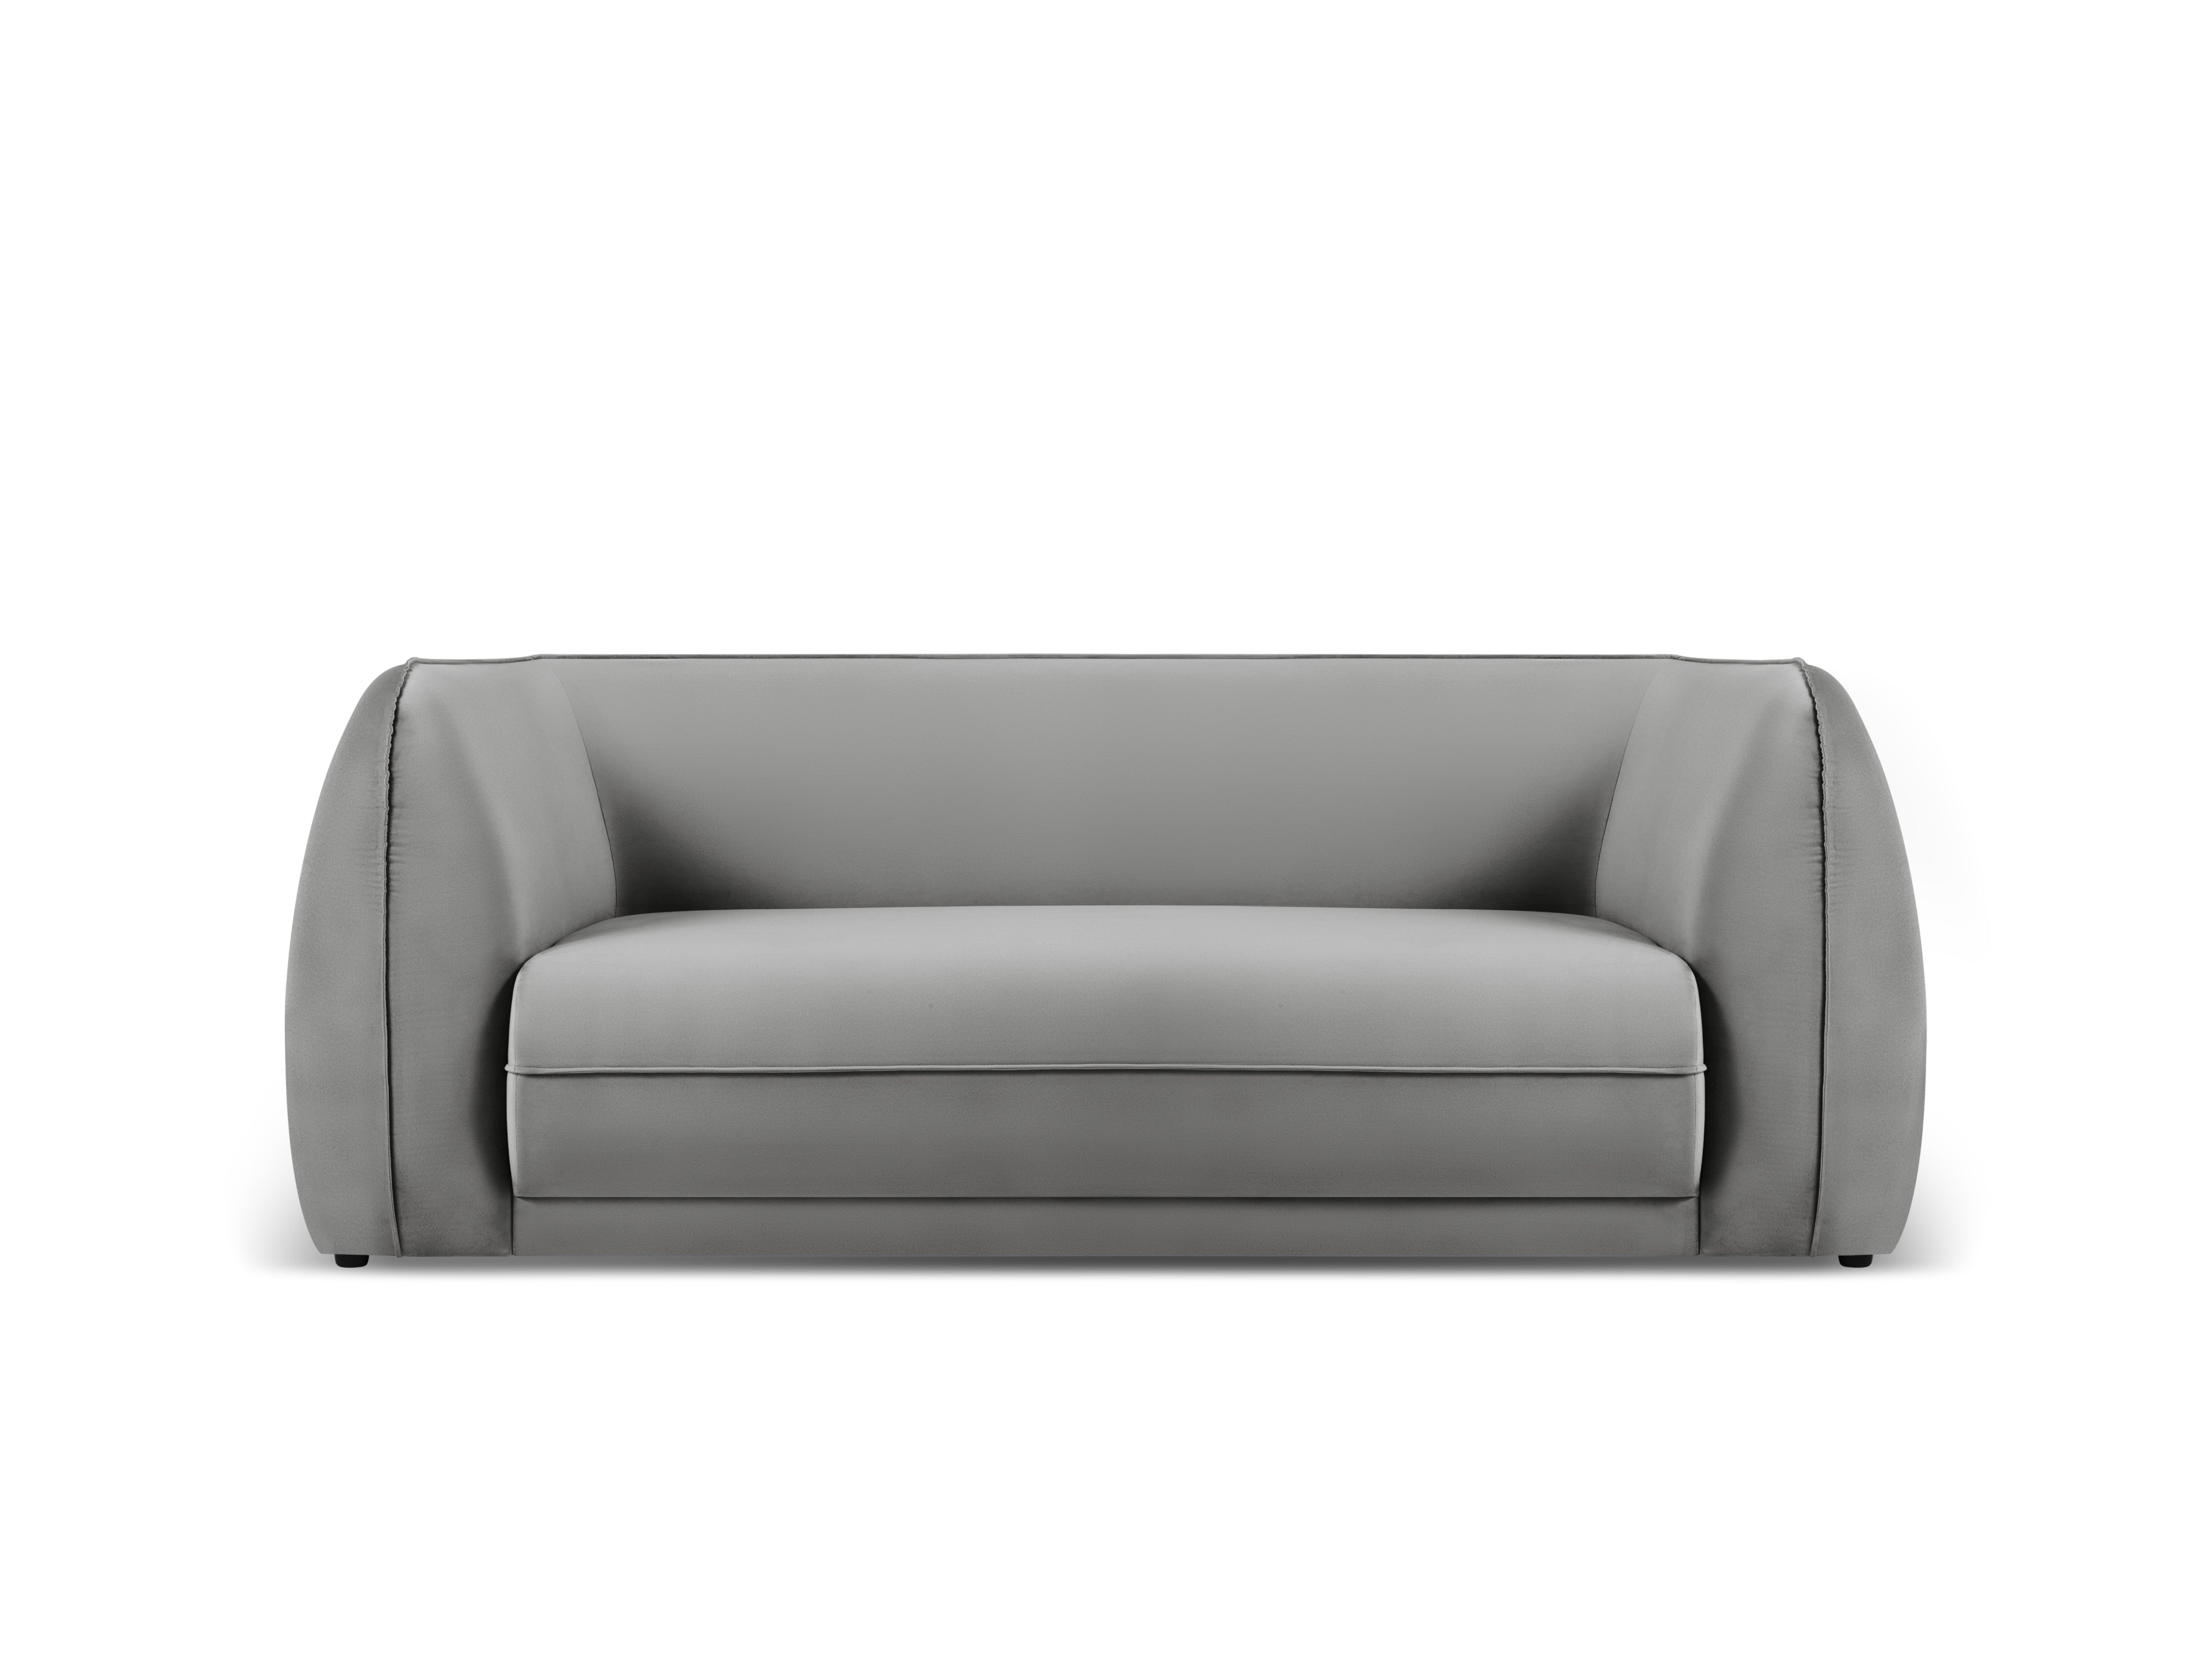 Velvet Sofa, "Lando", 2 Seats, 190x100x77
Made in Europe, Micadoni, Eye on Design